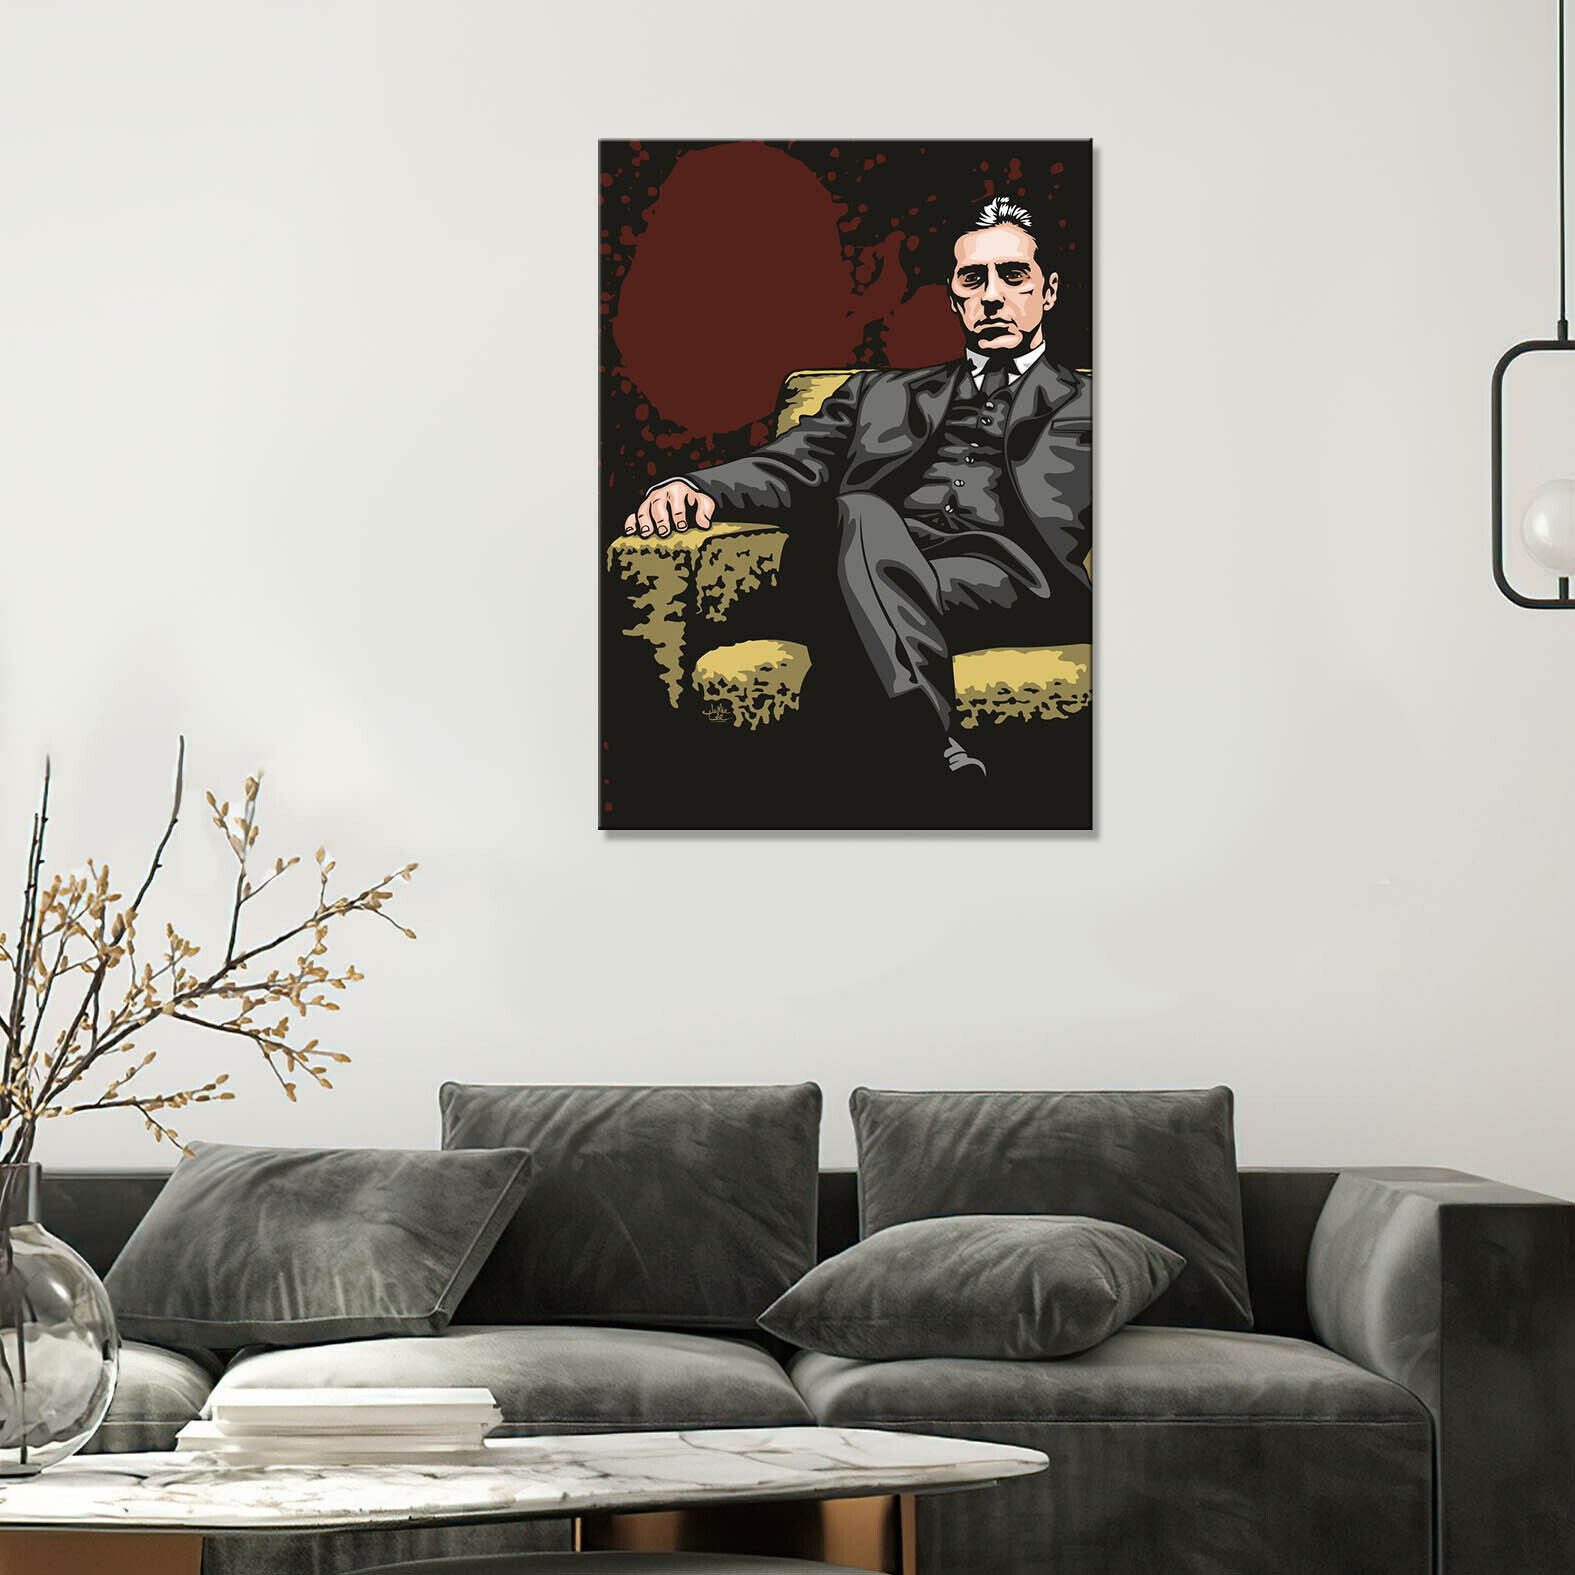 Интерьерная картина на холсте/ картина на стену/ в гостиную - Майкл Корлеоне арт 20х30